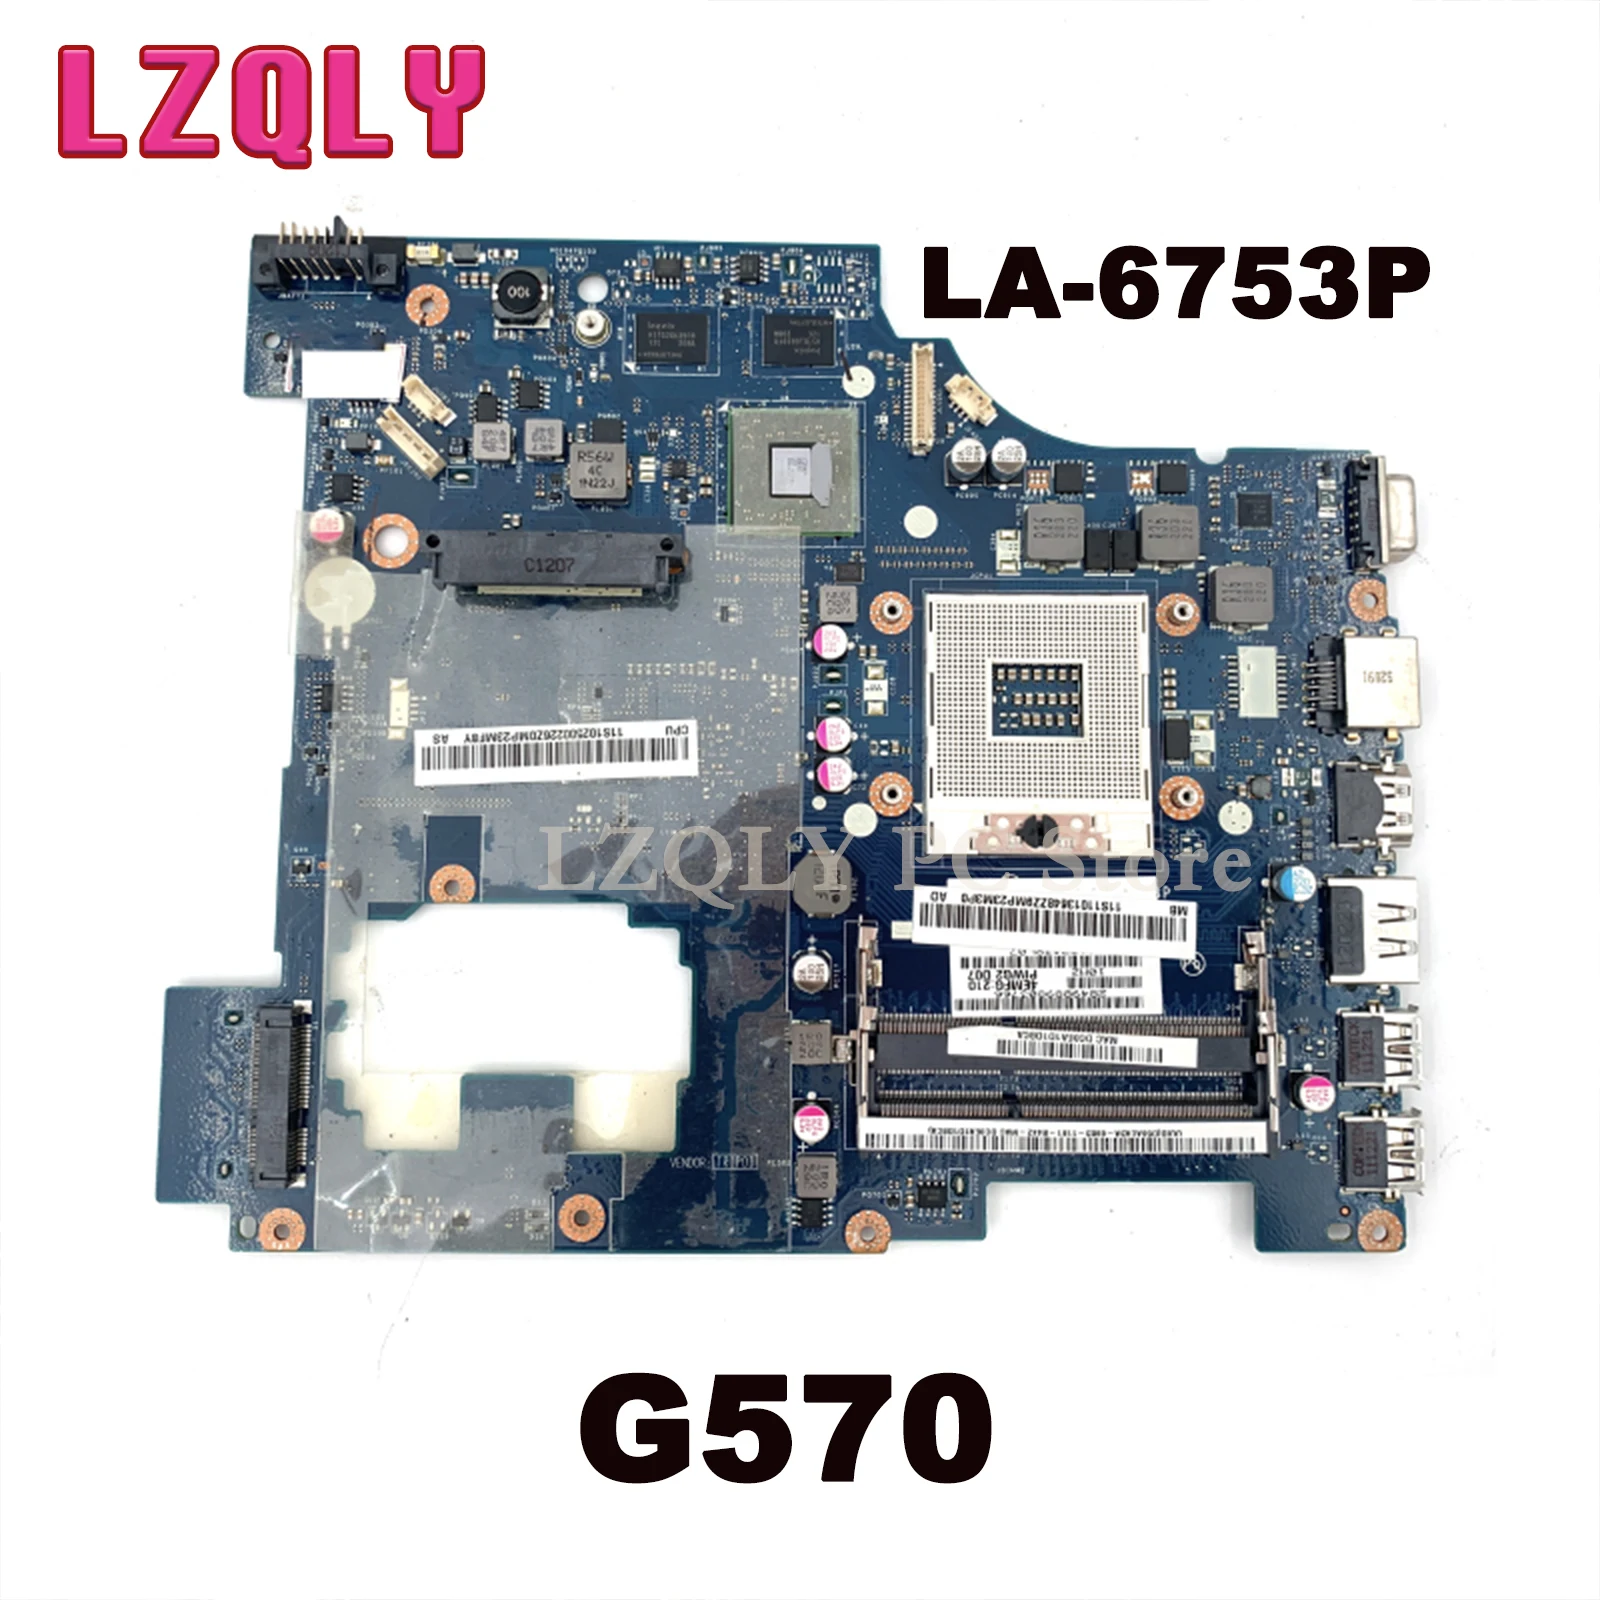 LZQLY PIWG2 LA-6753P For Lenovo G570 Laptop Motherboard HD 6300M GPU HM65 DDR3 main board full test